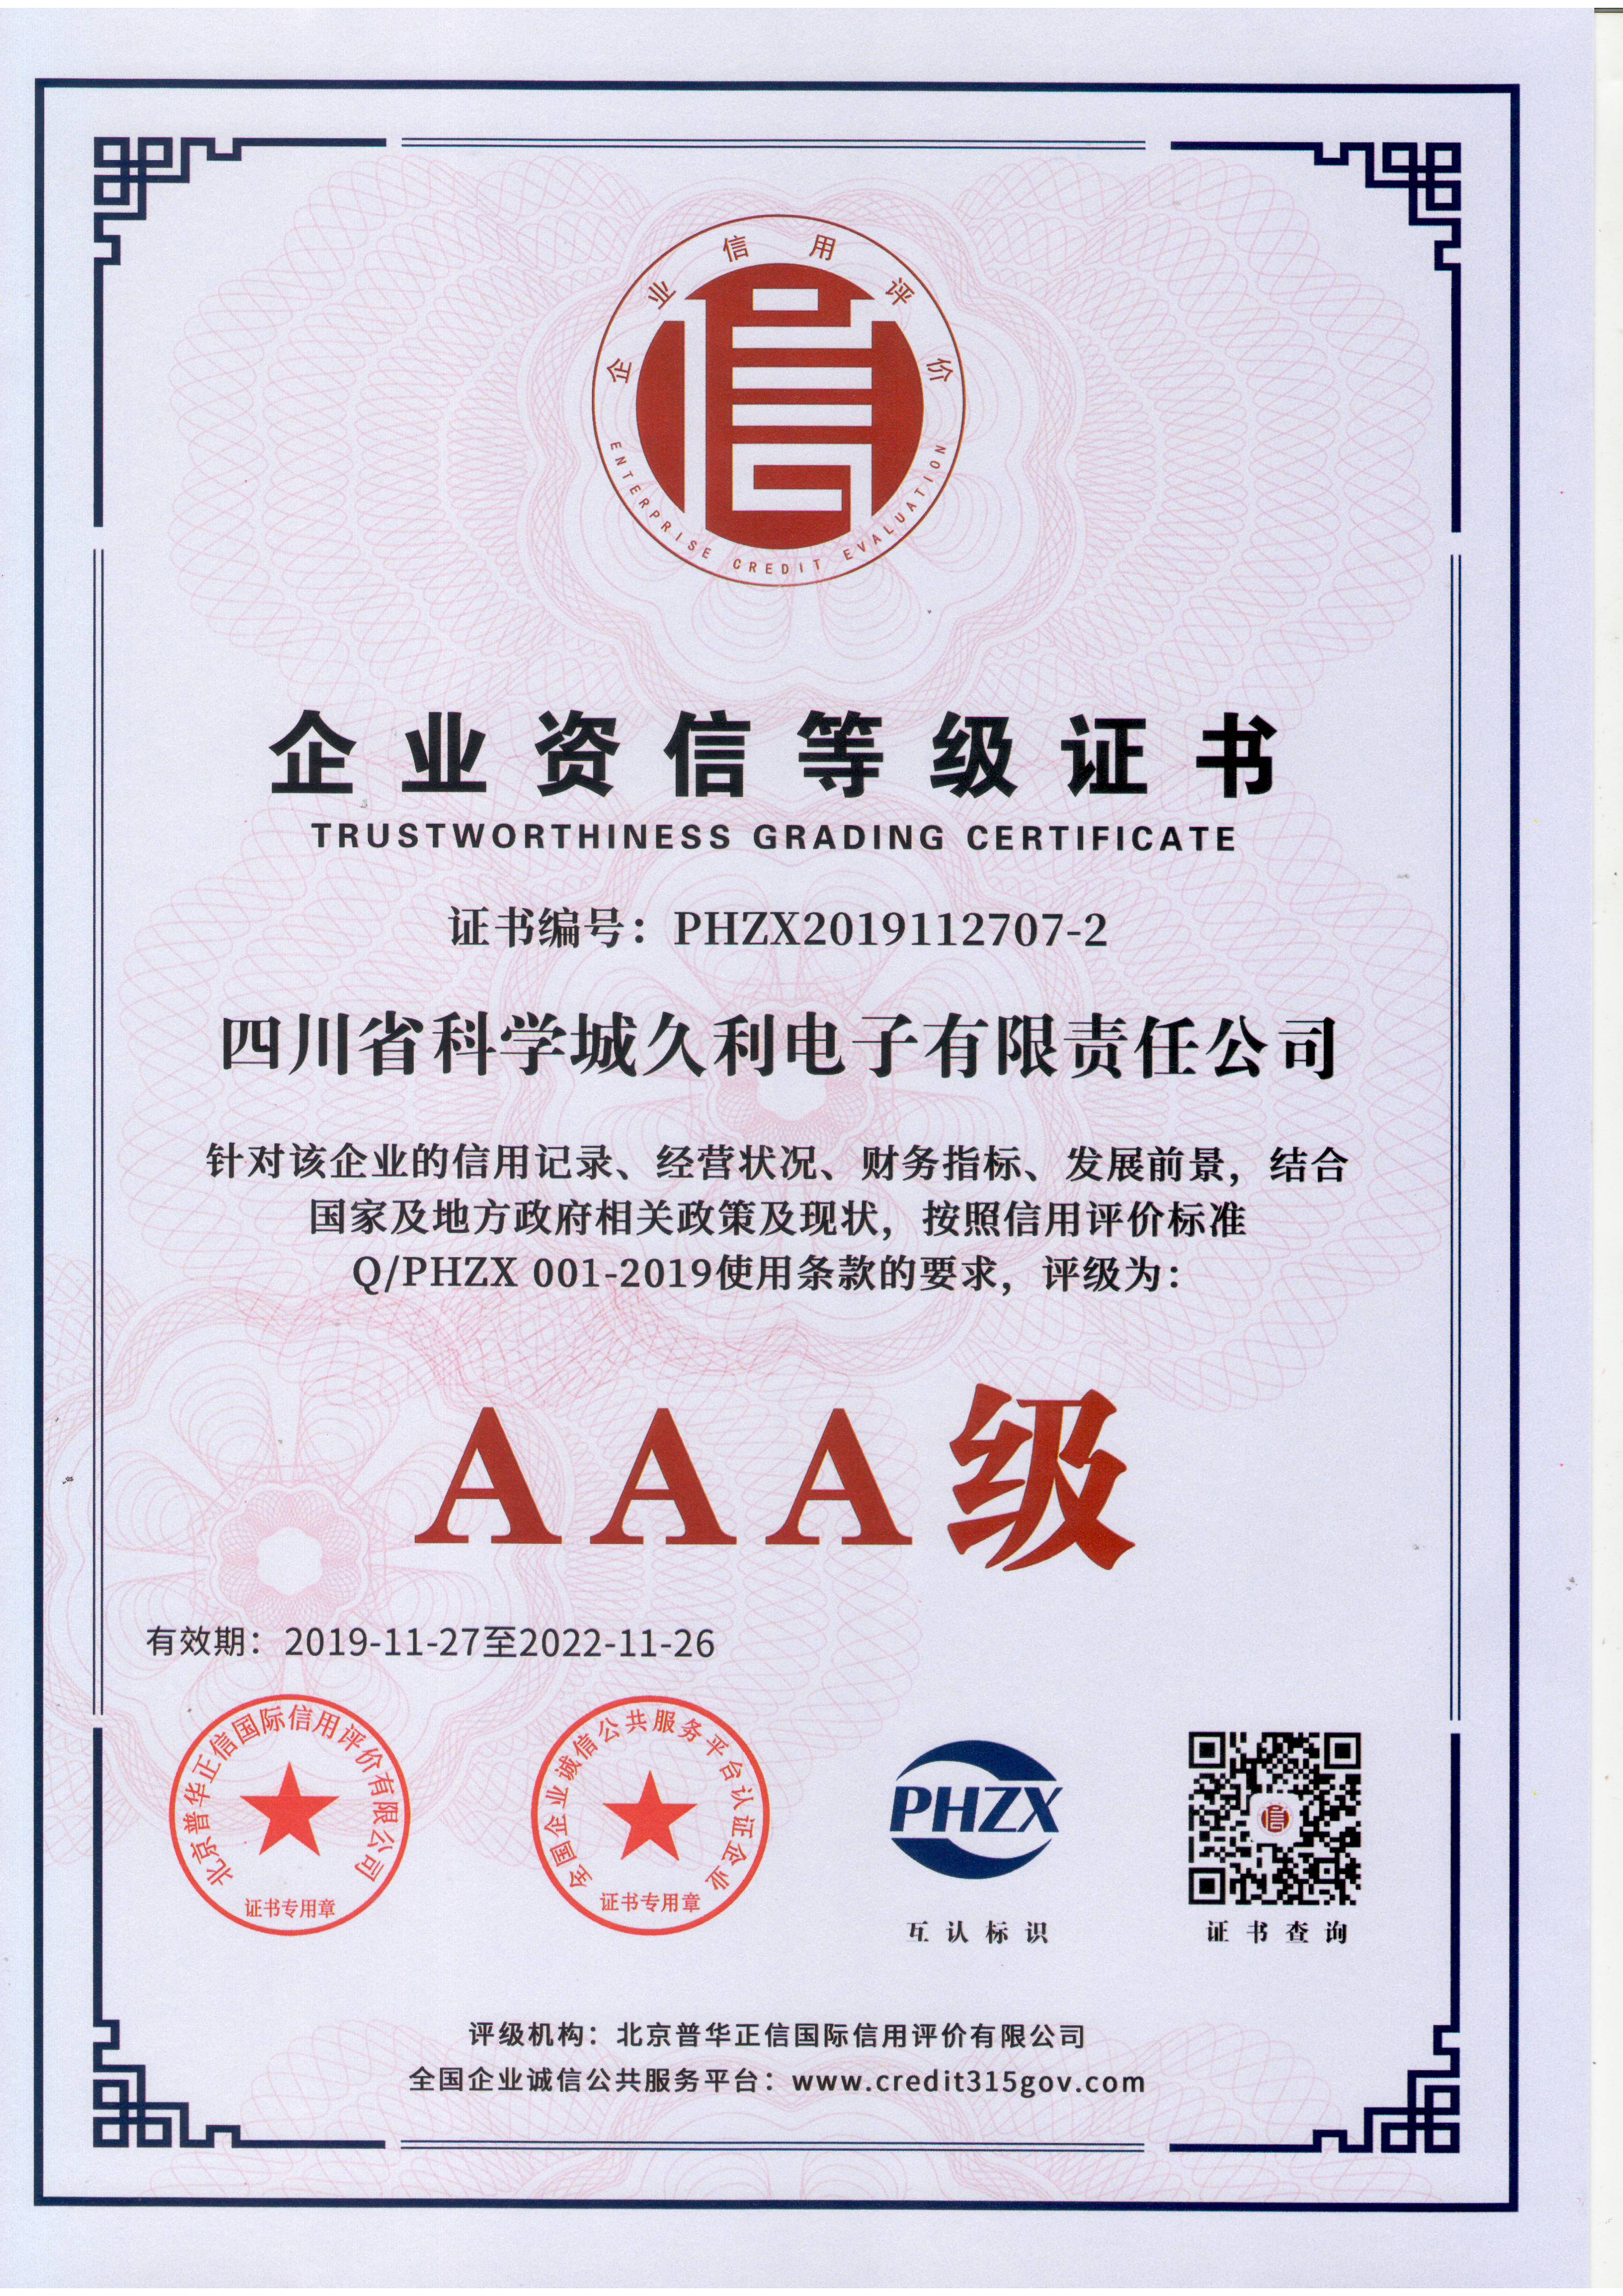 7.AAA级企业资信等级证书.JPG